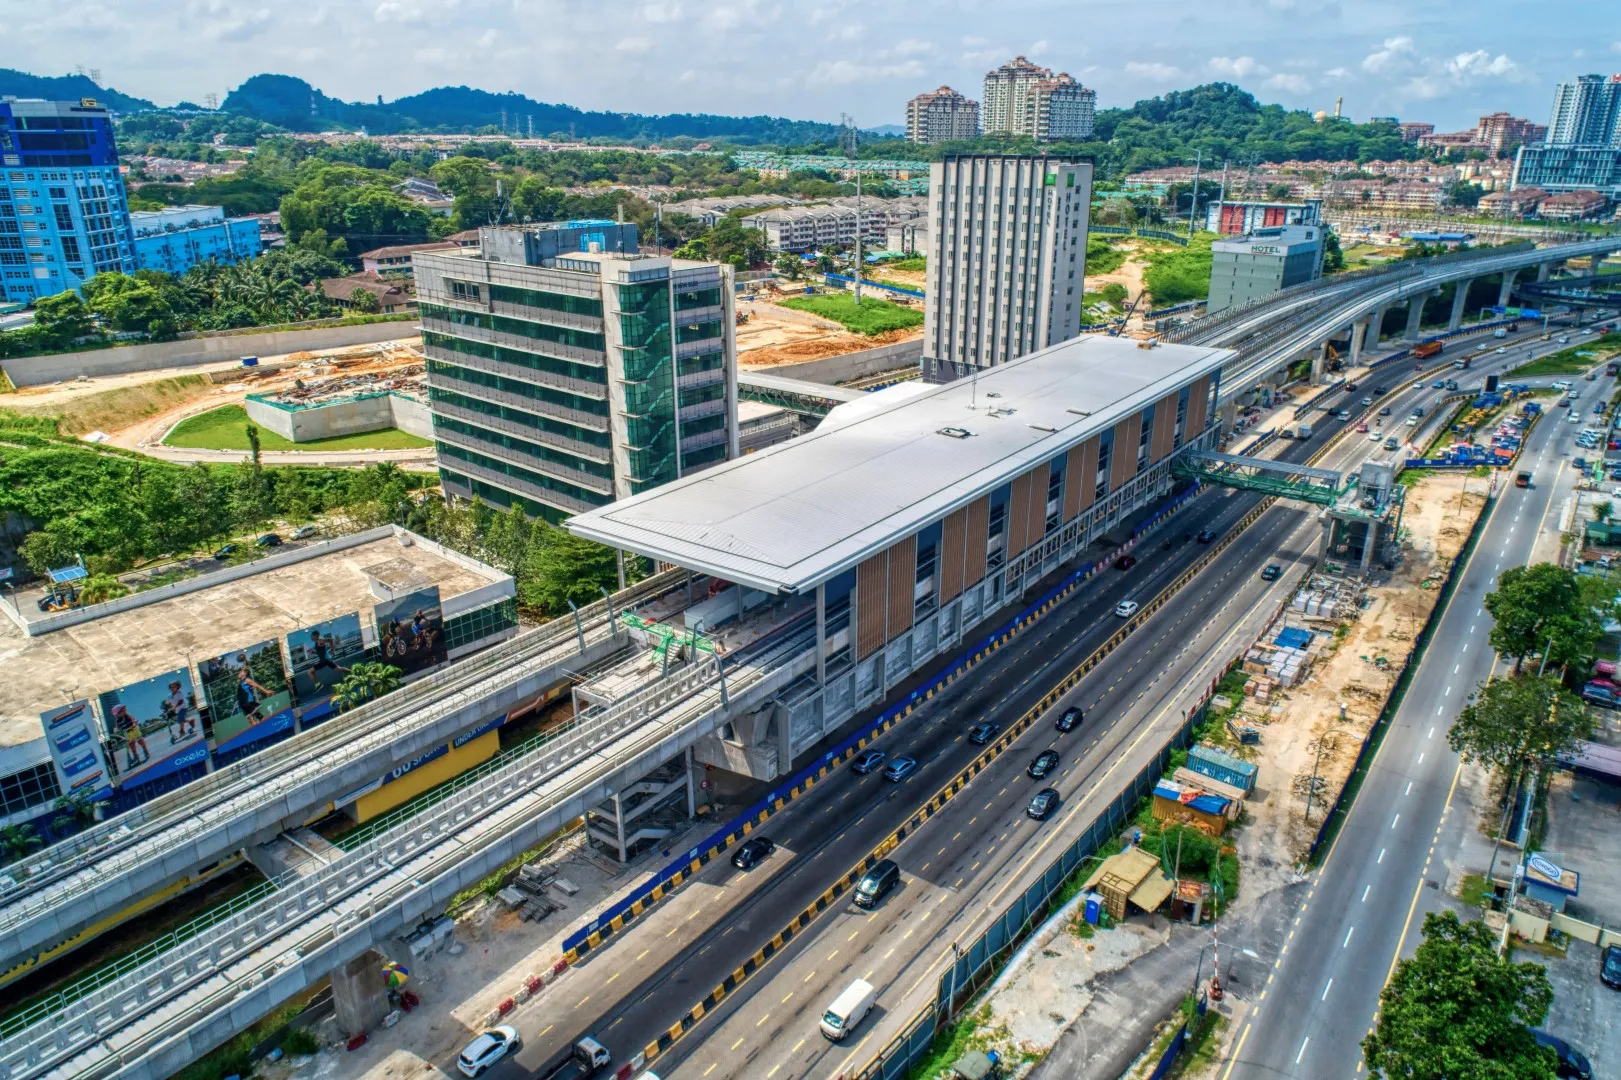 Aerial view of Sri Damansara Barat MRT station, Dec 2019